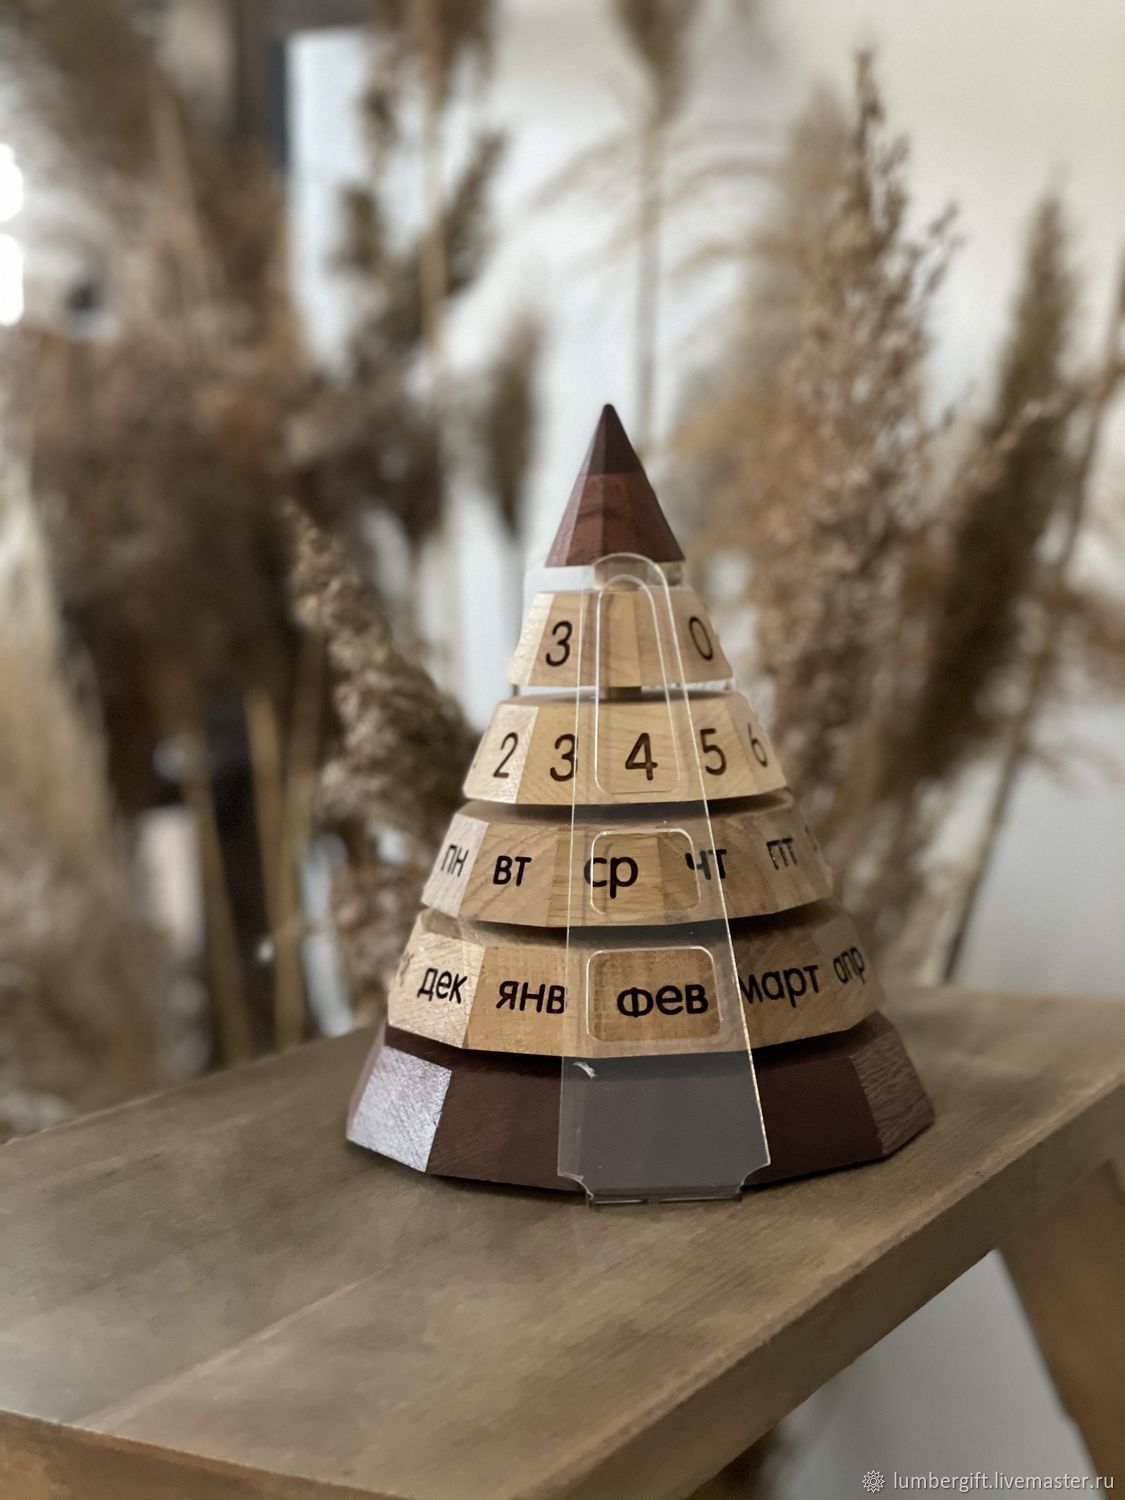 Perpetual Pyramid Calendar, Calendars, Moscow,  Фото №1